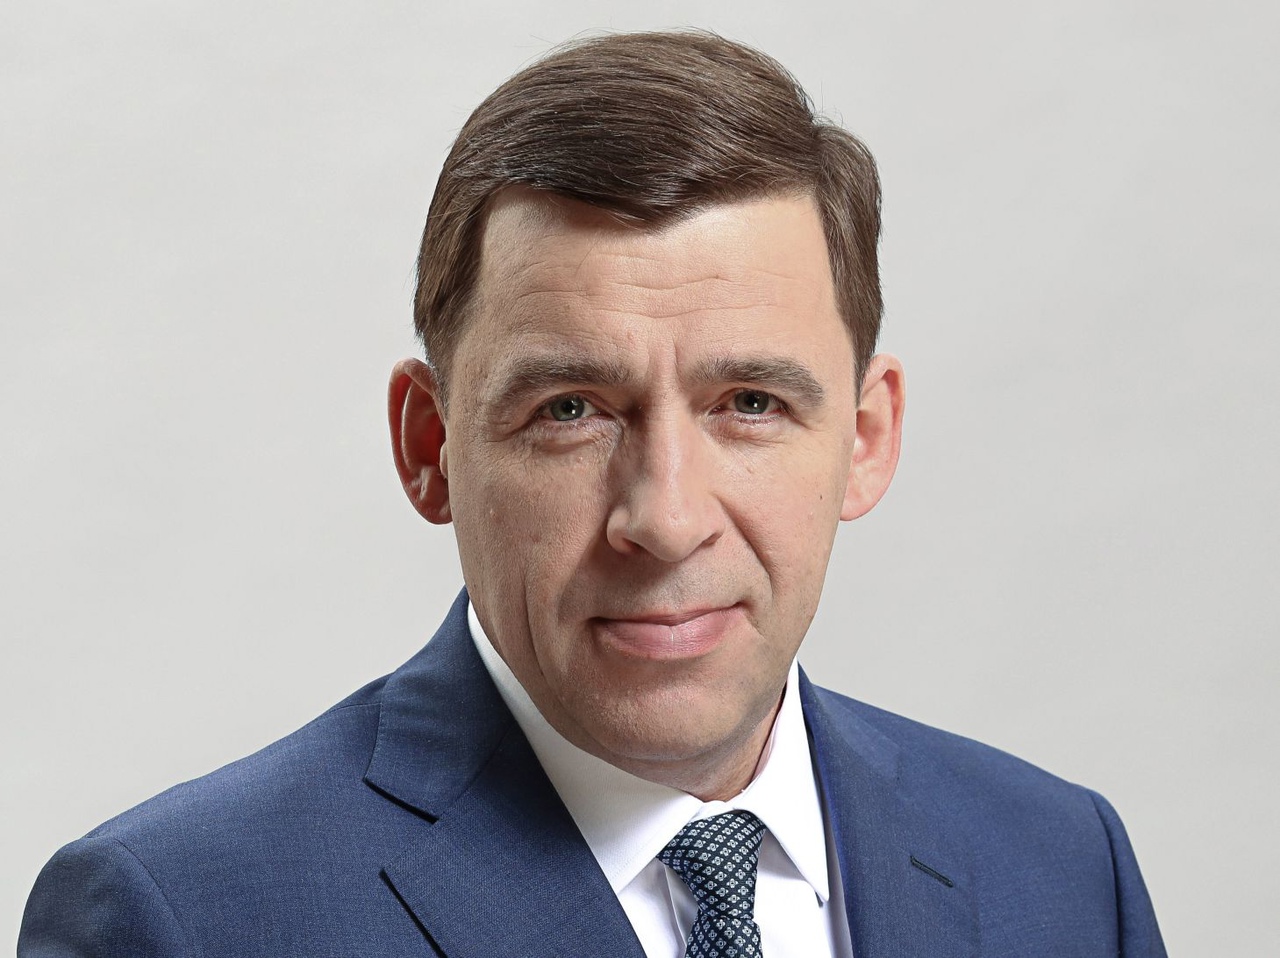 Губернатор Евгений Куйвашев